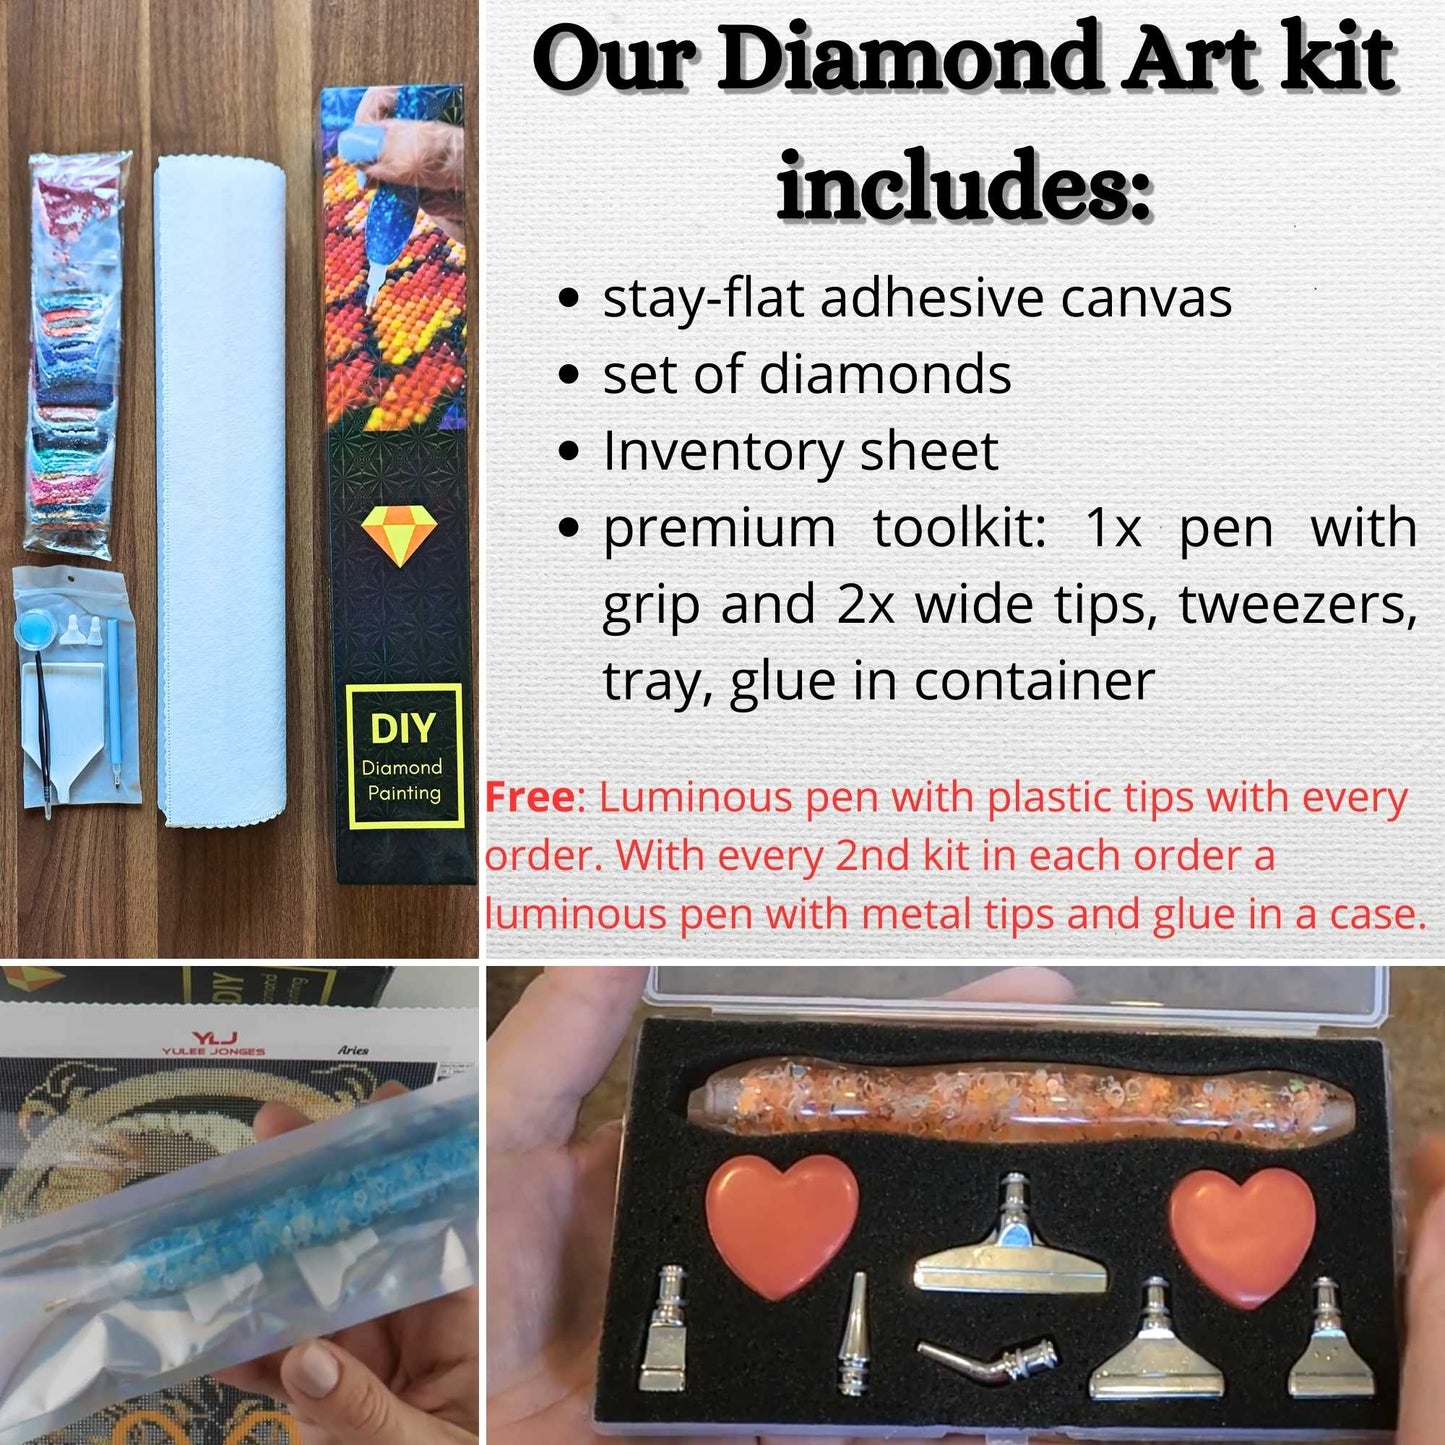 Starry Pines - Landscape Diamond Painting Kit - YLJ Art Shop - YLJ Art Shop